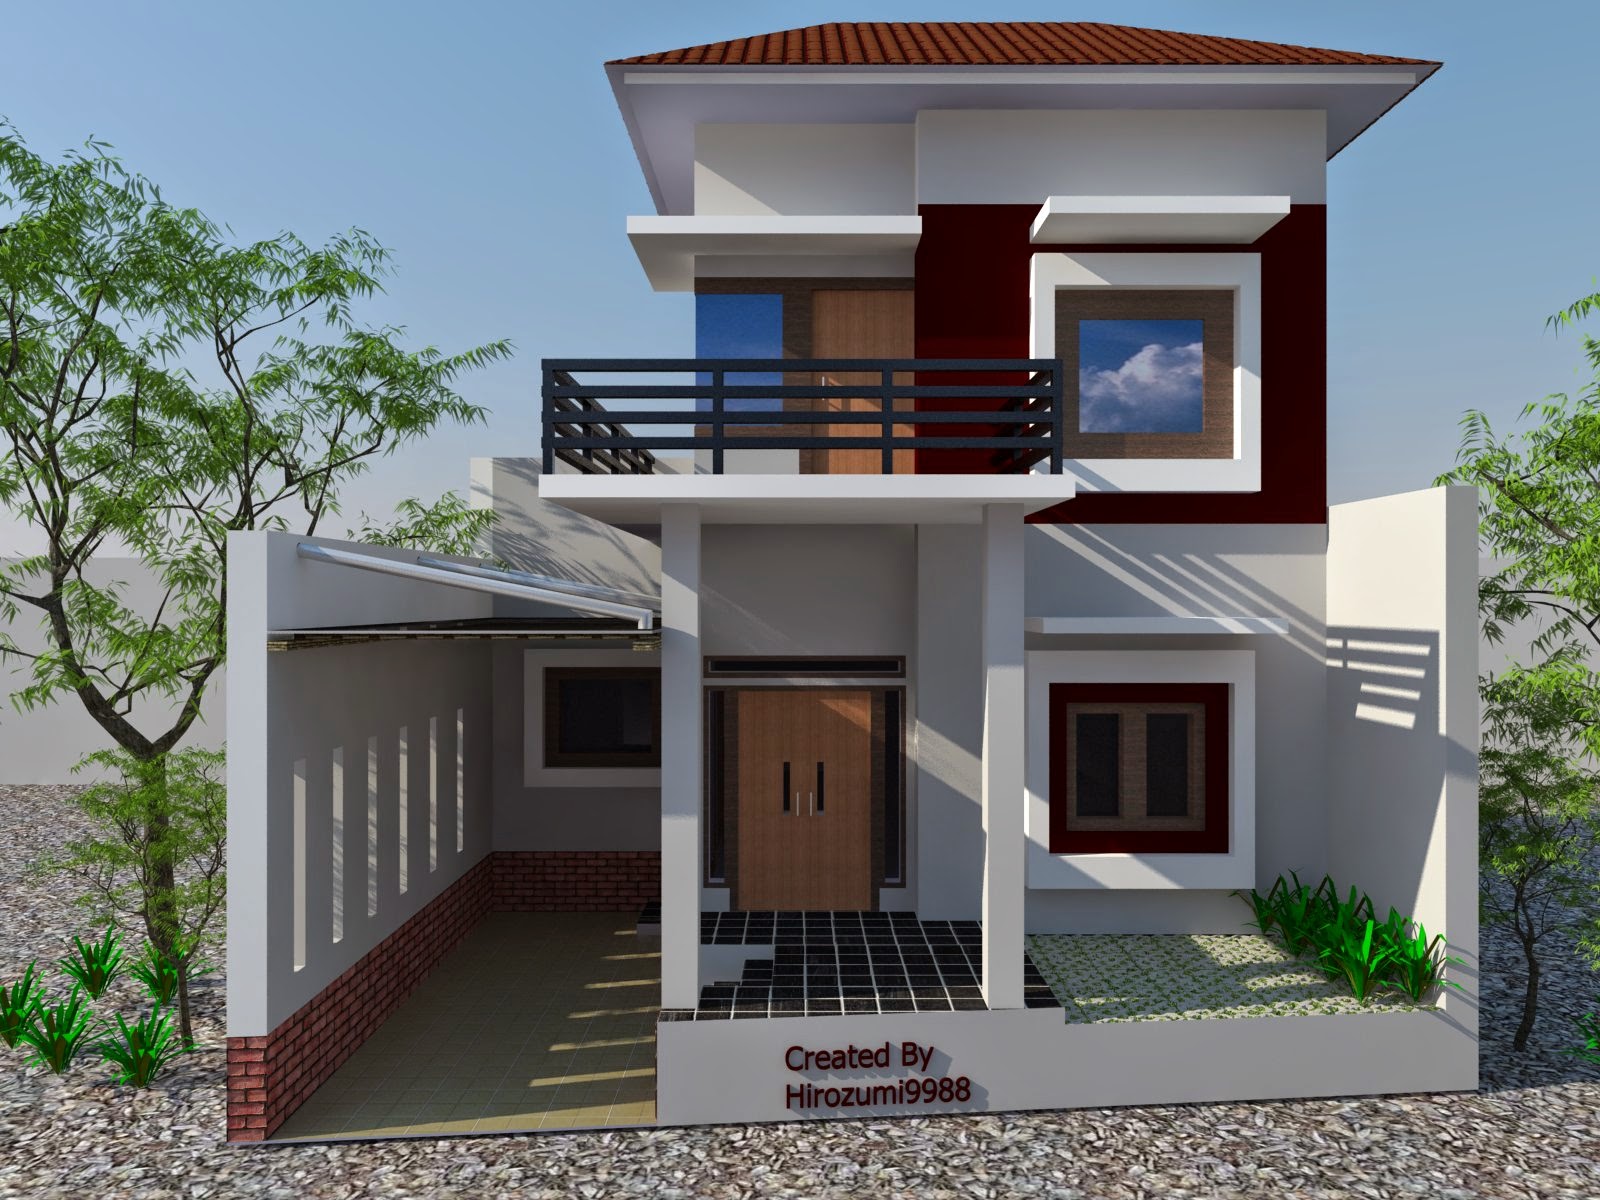 Kumpulan Rumah Minimalis Sederhana 2 Lantai Desain Rumah Minimalis